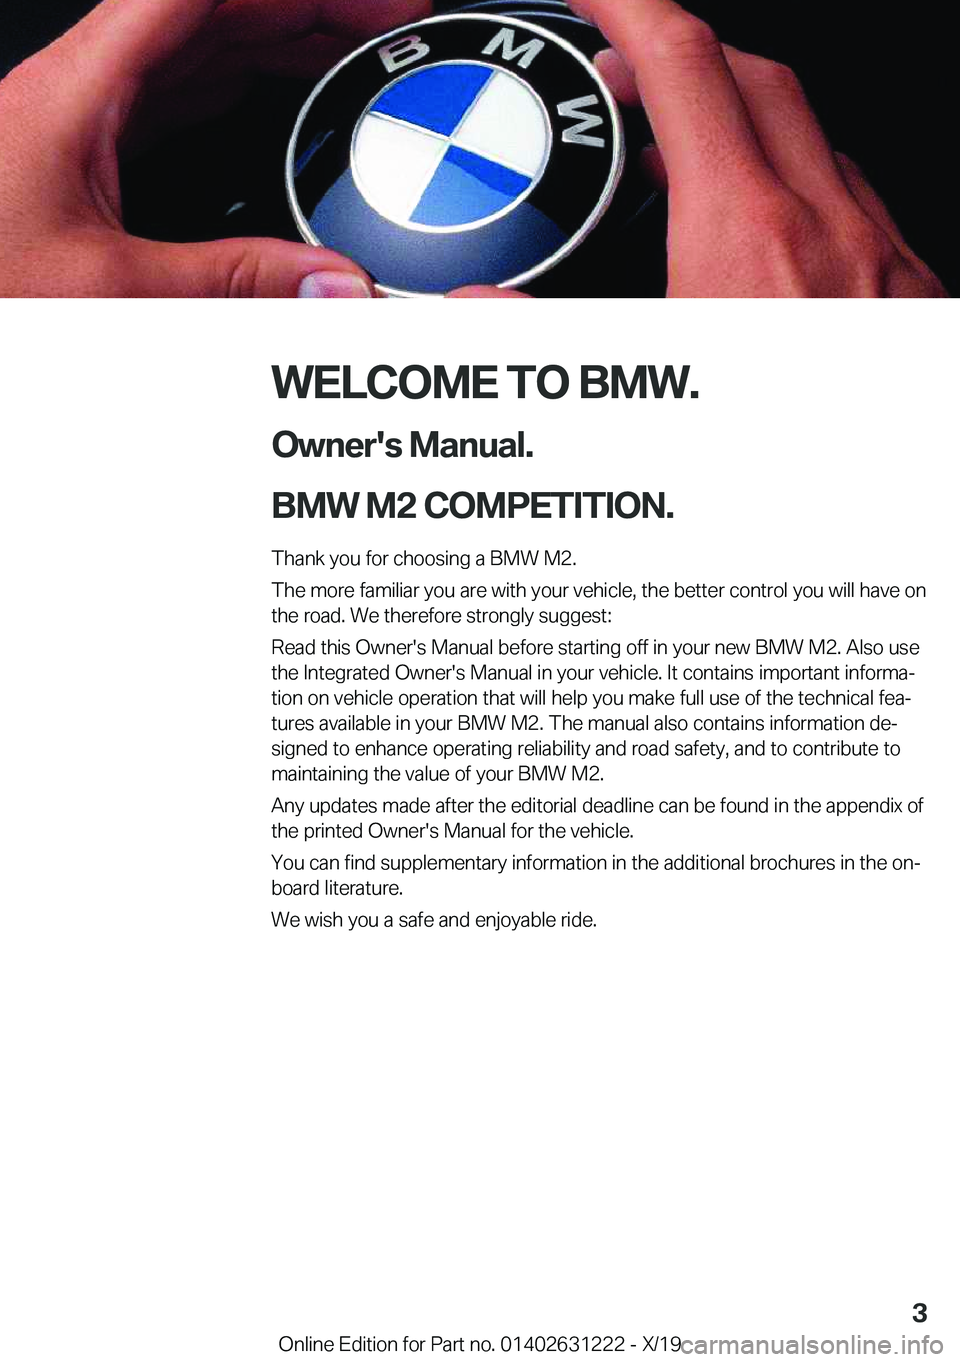 BMW M2 2020  Owners Manual �W�E�L�C�O�M�E��T�O��B�M�W�.�O�w�n�e�r�'�s��M�a�n�u�a�l�.
�B�M�W��M�2��C�O�M�P�E�T�I�T�I�O�N�.�
�T�h�a�n�k��y�o�u��f�o�r��c�h�o�o�s�i�n�g��a��B�M�W��M�2�.
�T�h�e��m�o�r�e��f�a�m�i�l�